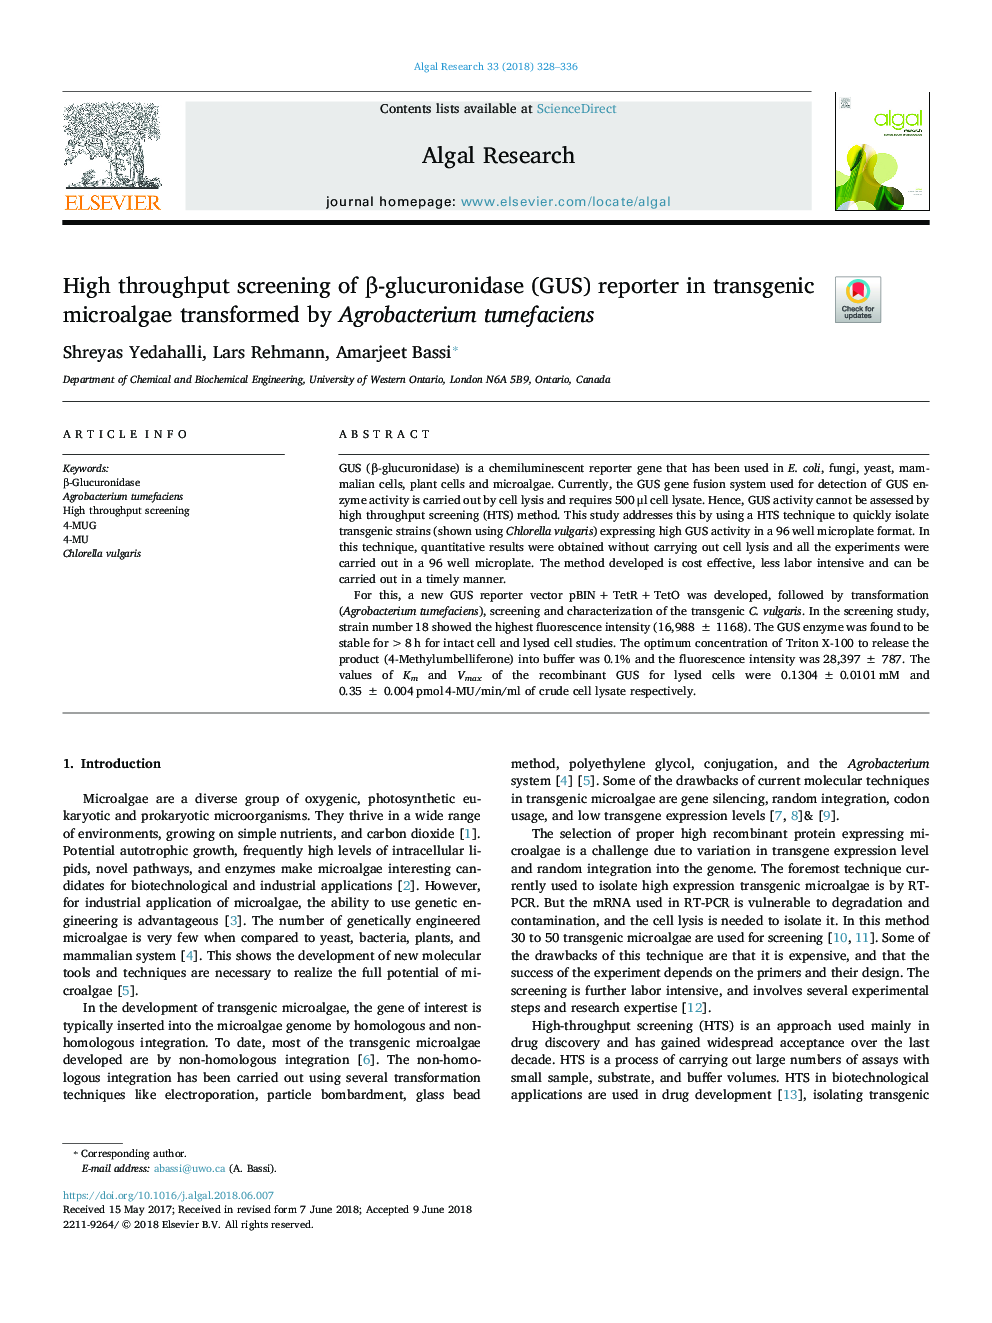 High throughput screening of Î²-glucuronidase (GUS) reporter in transgenic microalgae transformed by Agrobacterium tumefaciens